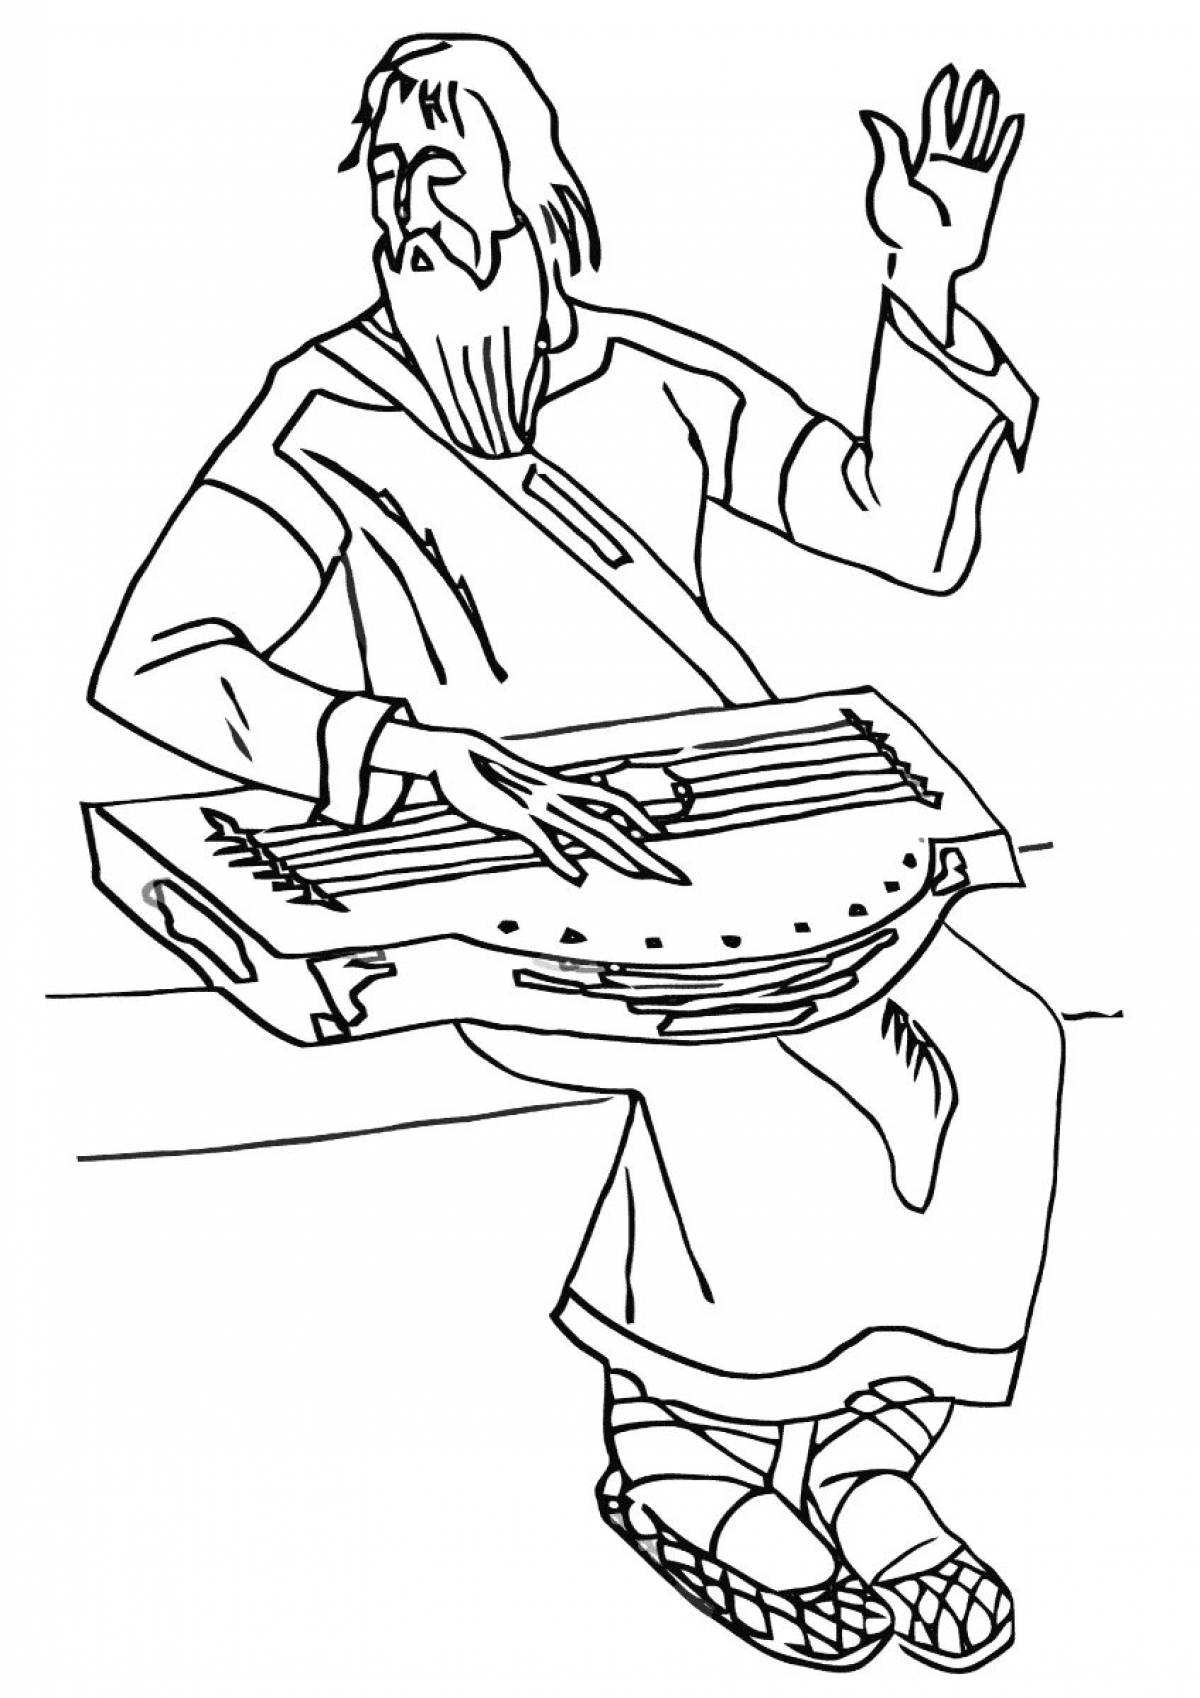 Drawing of a magic harp